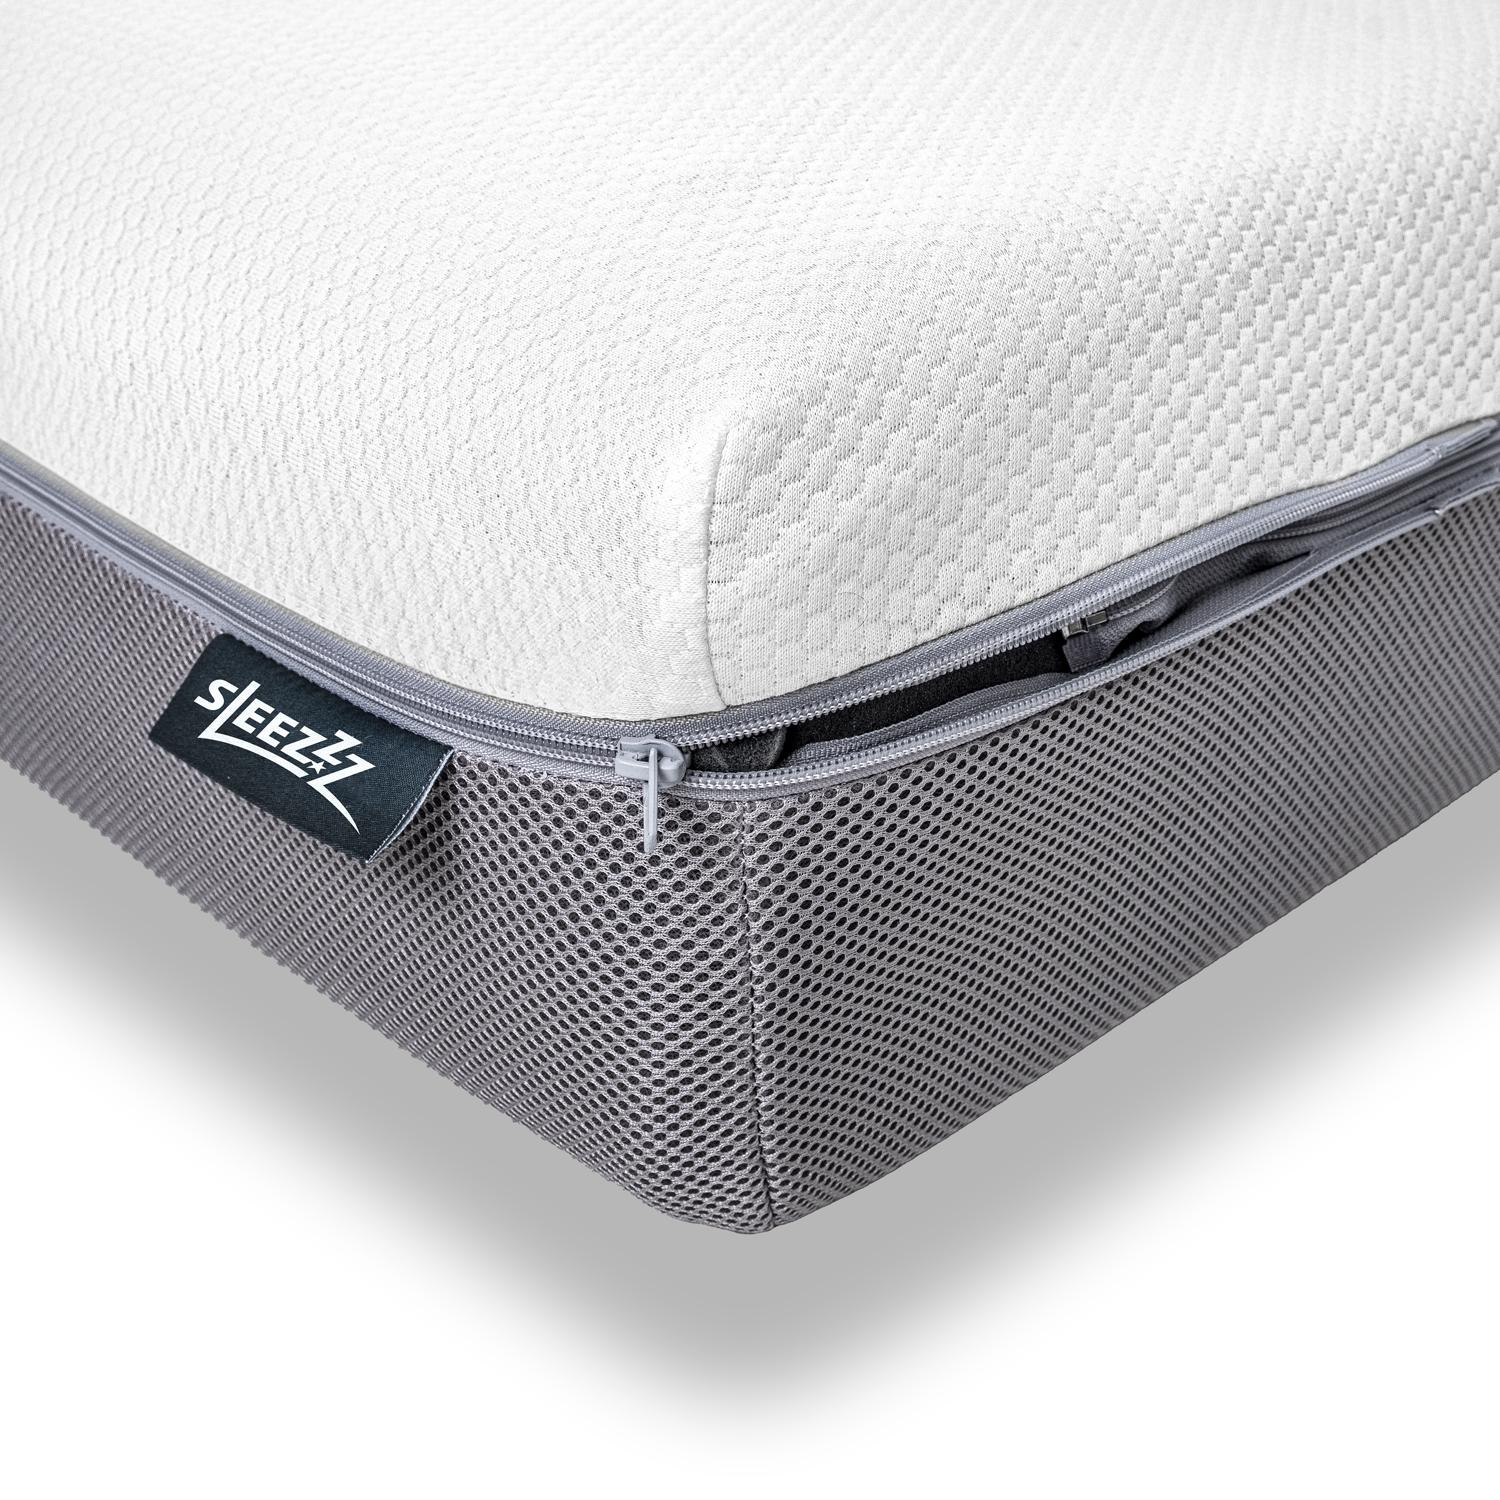 Sleezzz Premium viscoelastic mattress 140 x 200 cm, height 20 cm, firmness level H2/H3, with reversible handles